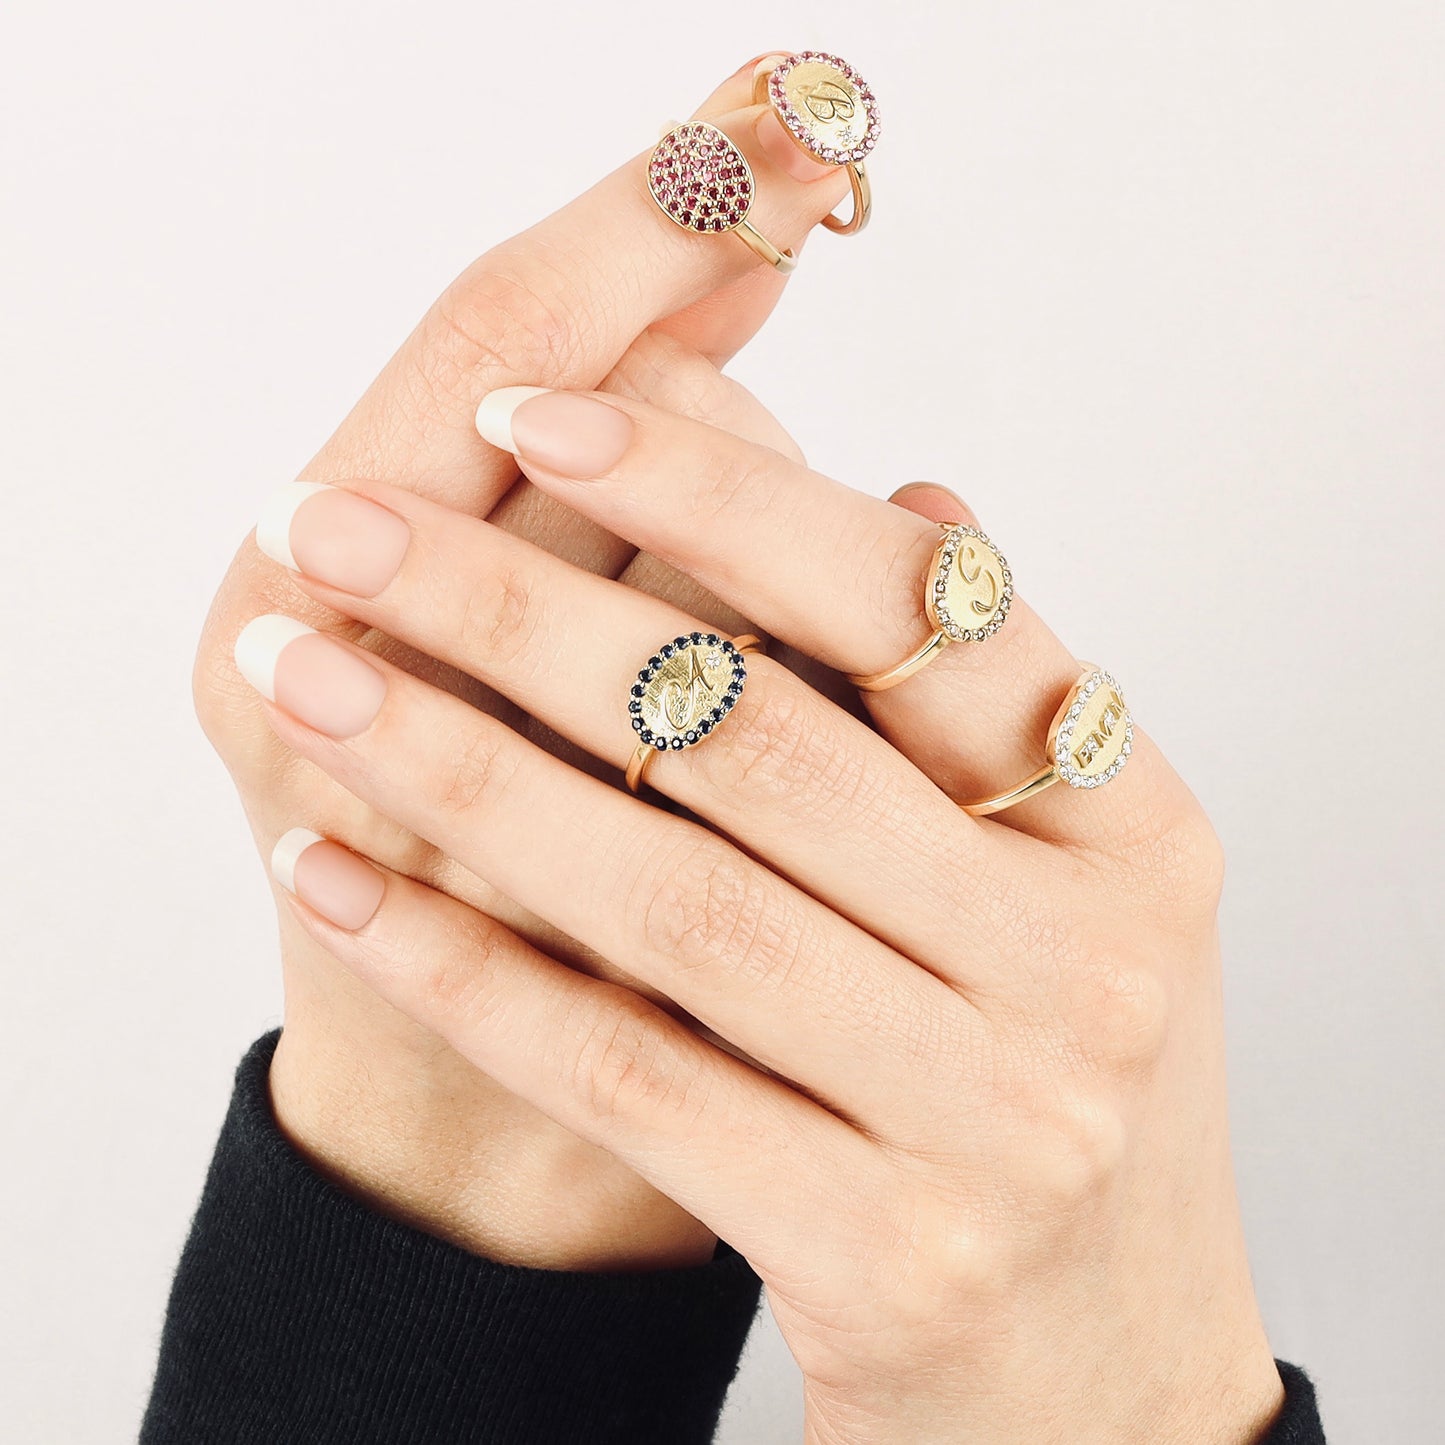 Danielle Morgan Jewelry - 18k initial "cuff" ring